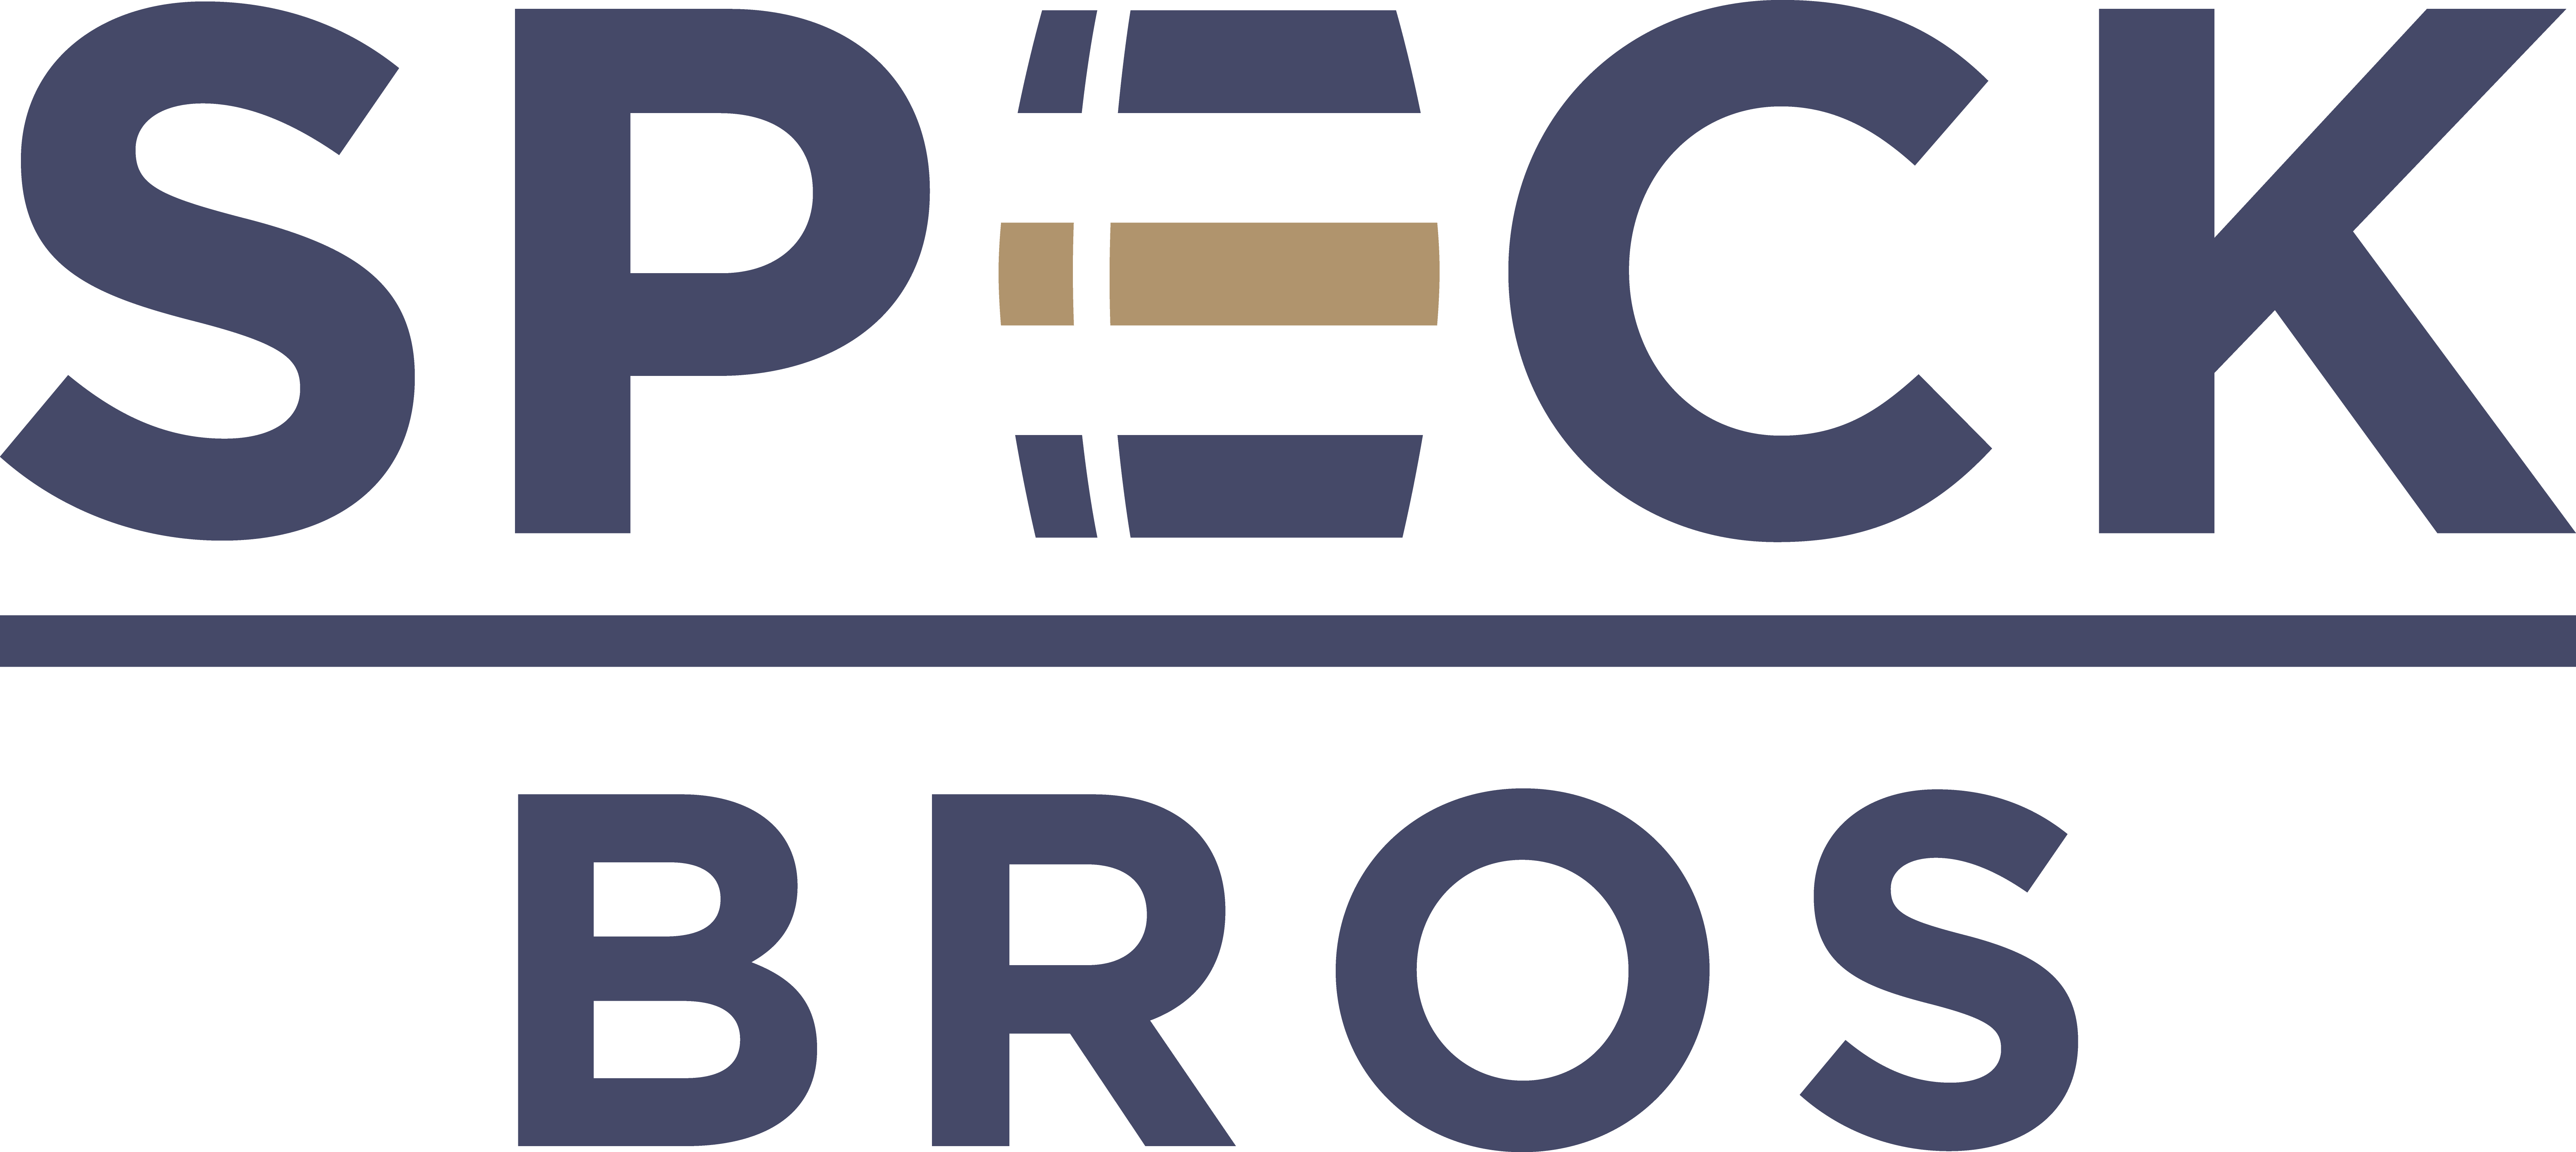 Speck Bros Logo